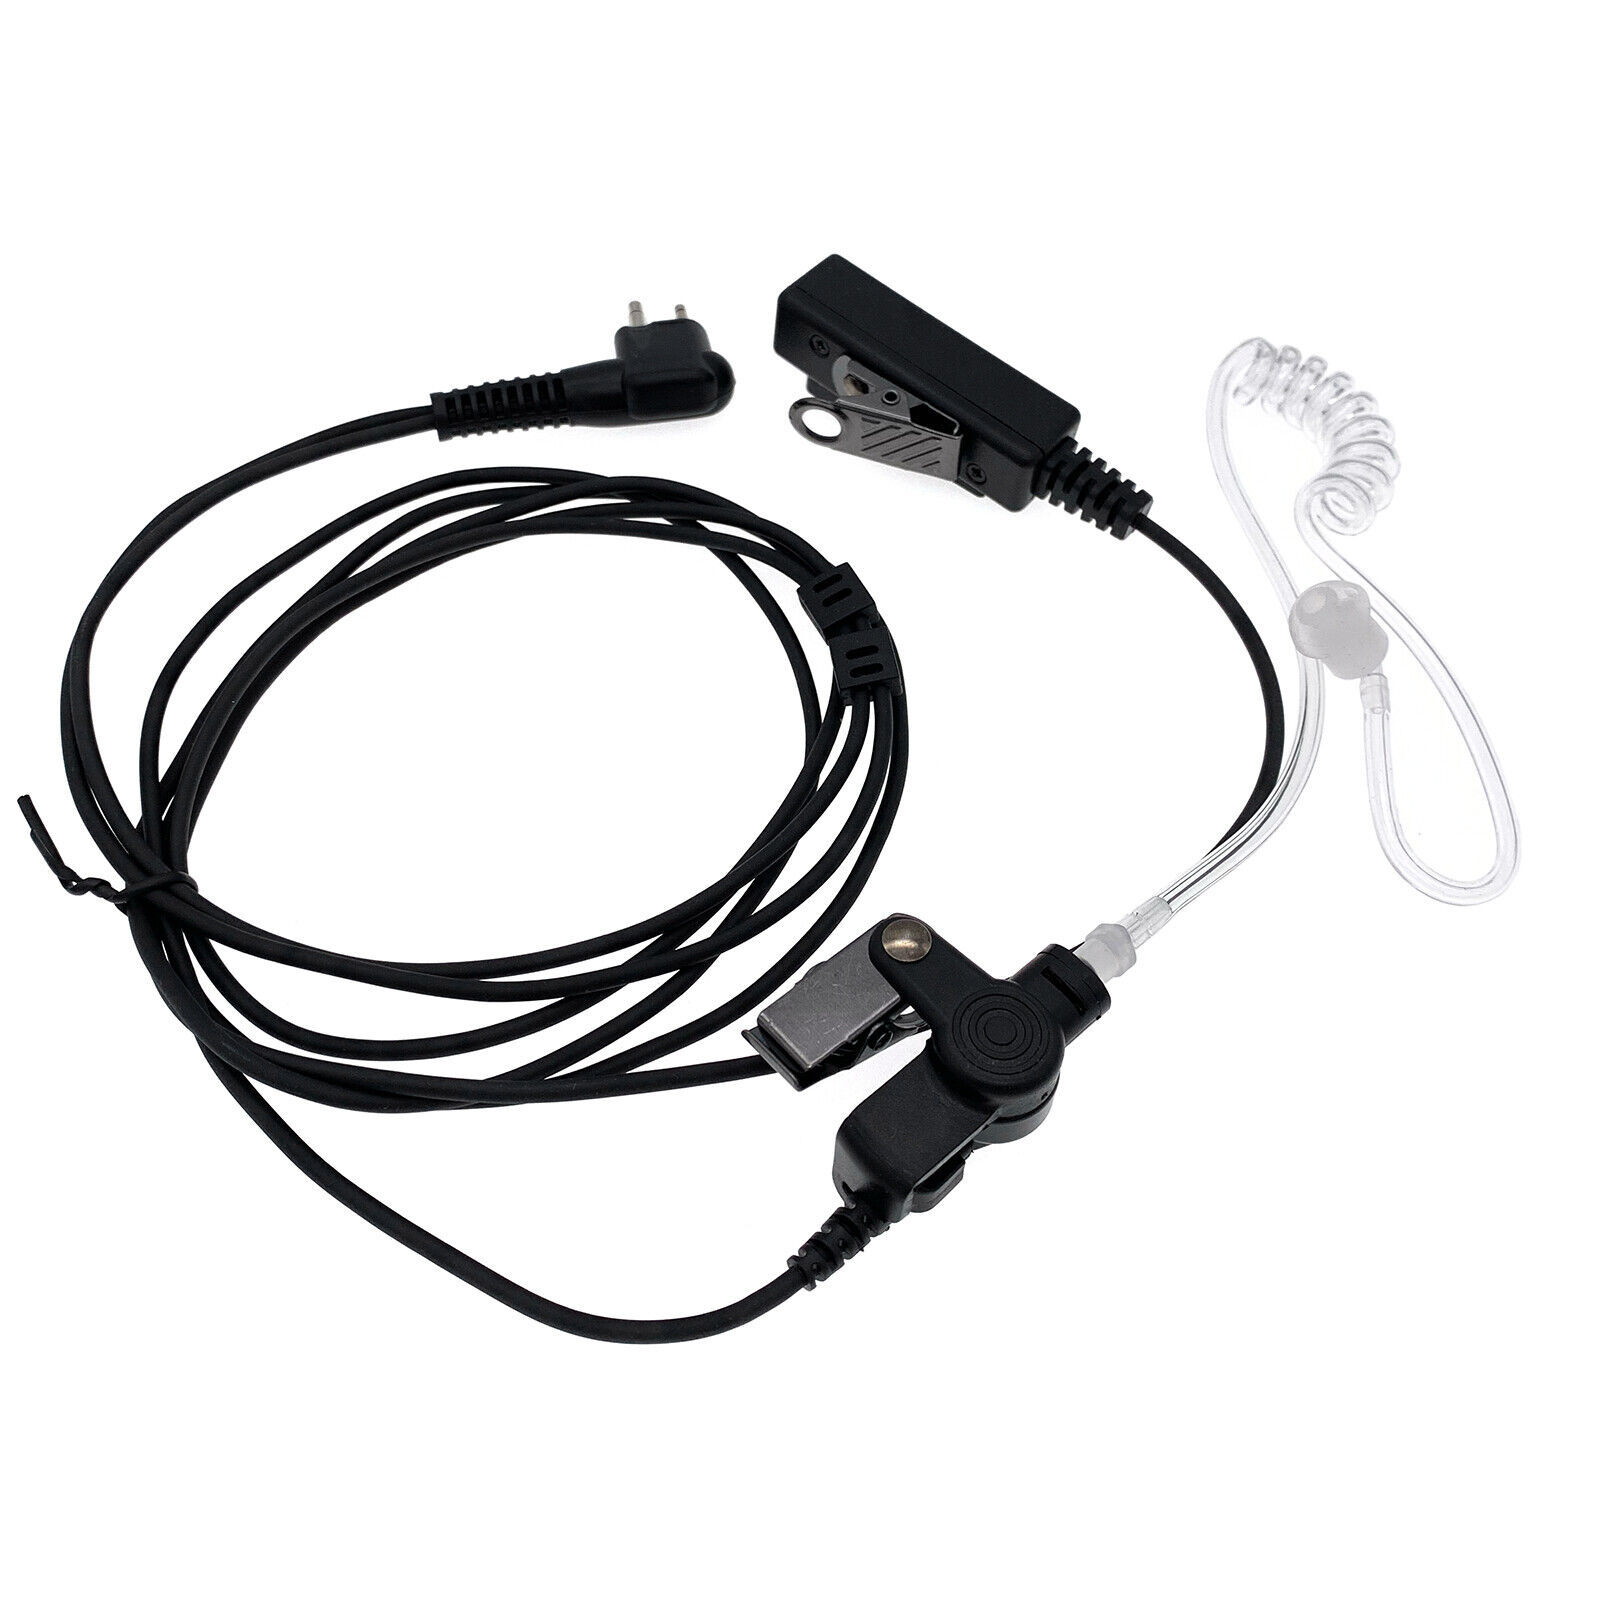 Primary image for 2-Wire Security Surveillance Kit Headset Earpiece Motorola Radio Bpr-40 Ep-450